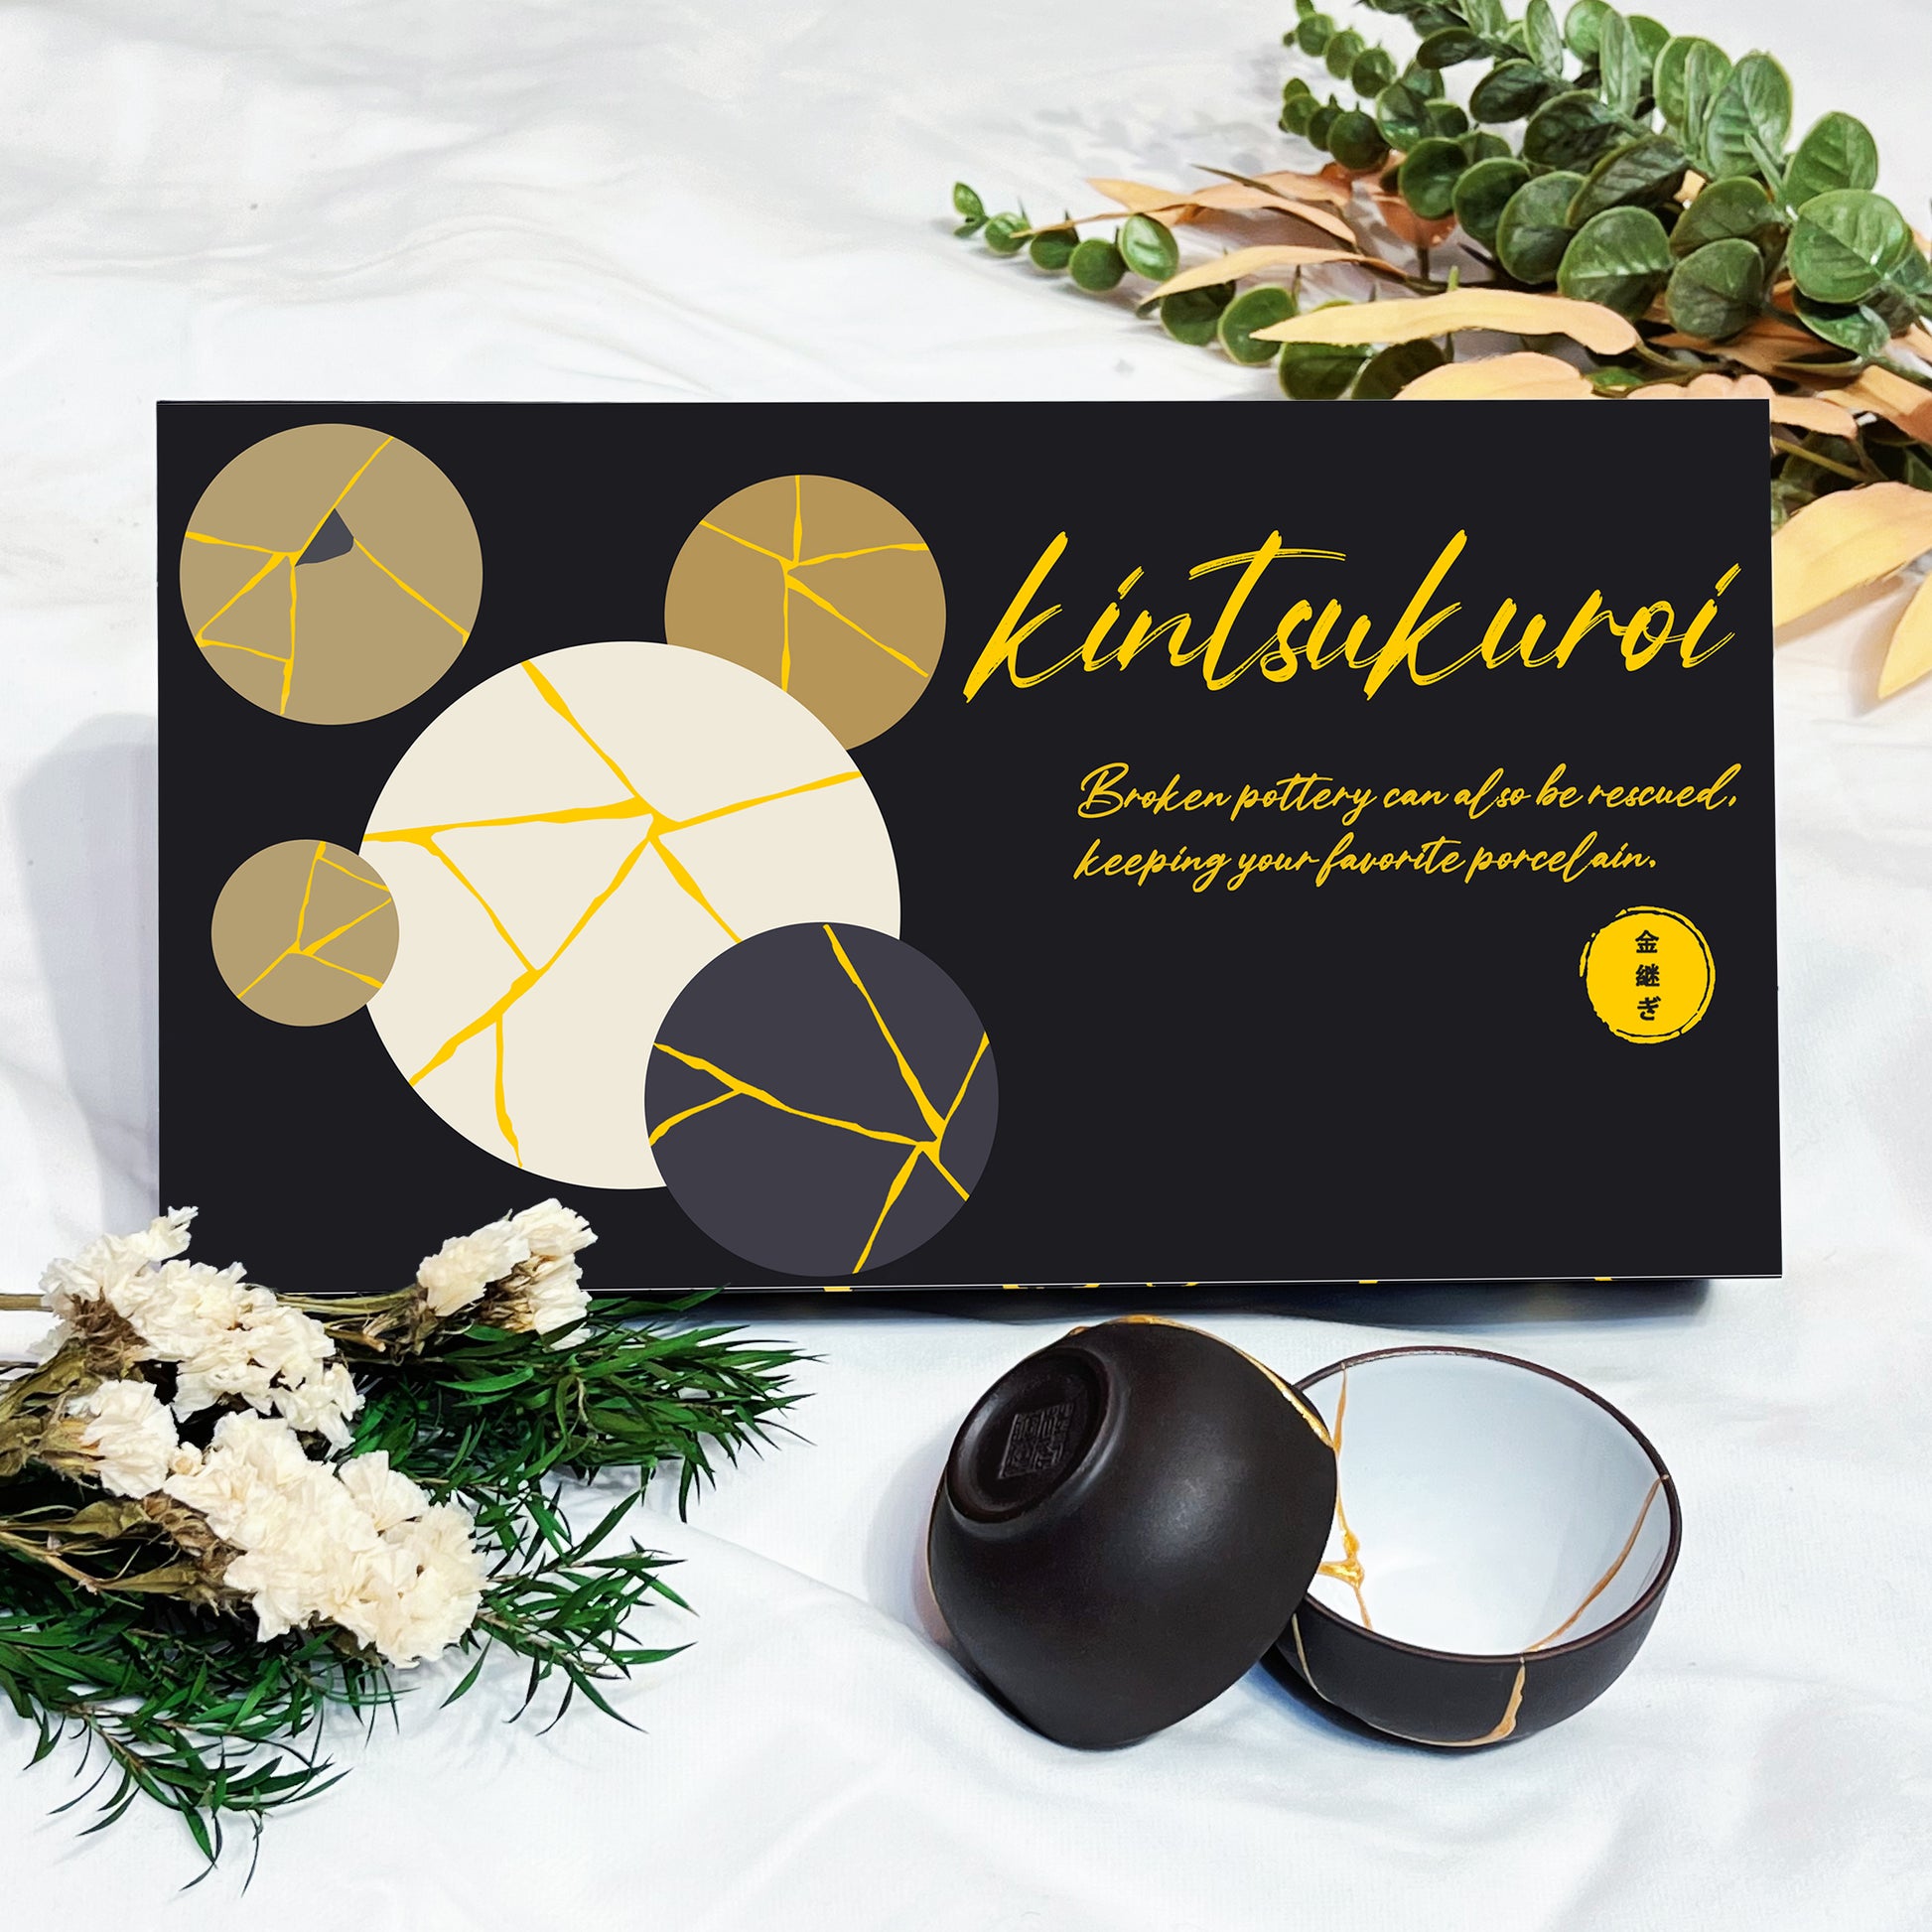 Kintsugi Repair Kit, Repair Your Meaningful Pottery with Gold Powder 50ml  Glue, Japanese KINTSUGI Ceramic Repair Starter Kit- an Practice Ceramic  Cups Free for Kintsukuroi Beginner